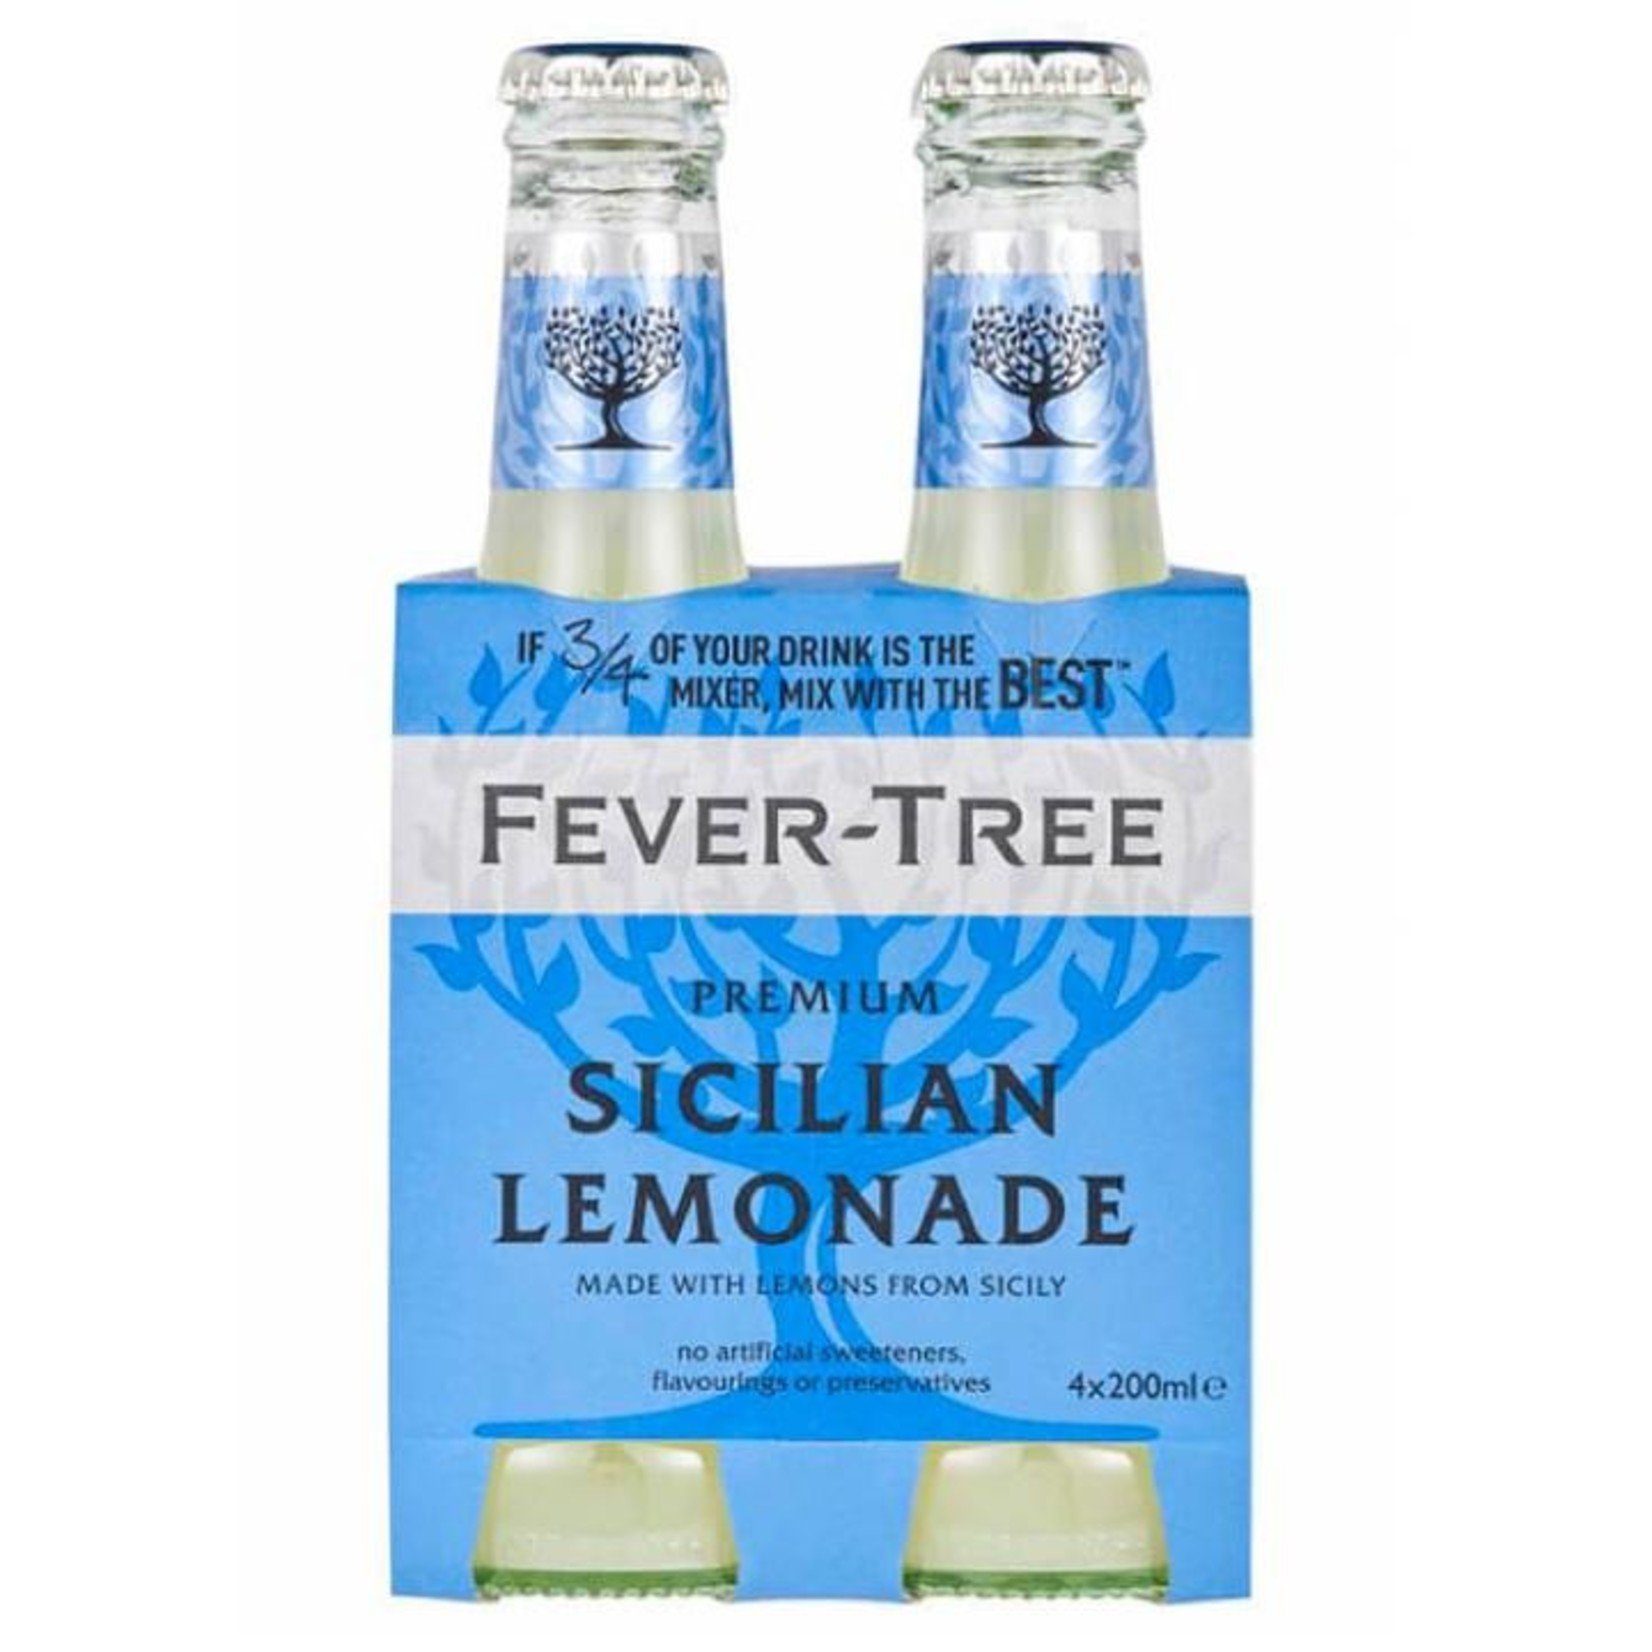 Fever-Tree Sparkling Sicilian Lemonade